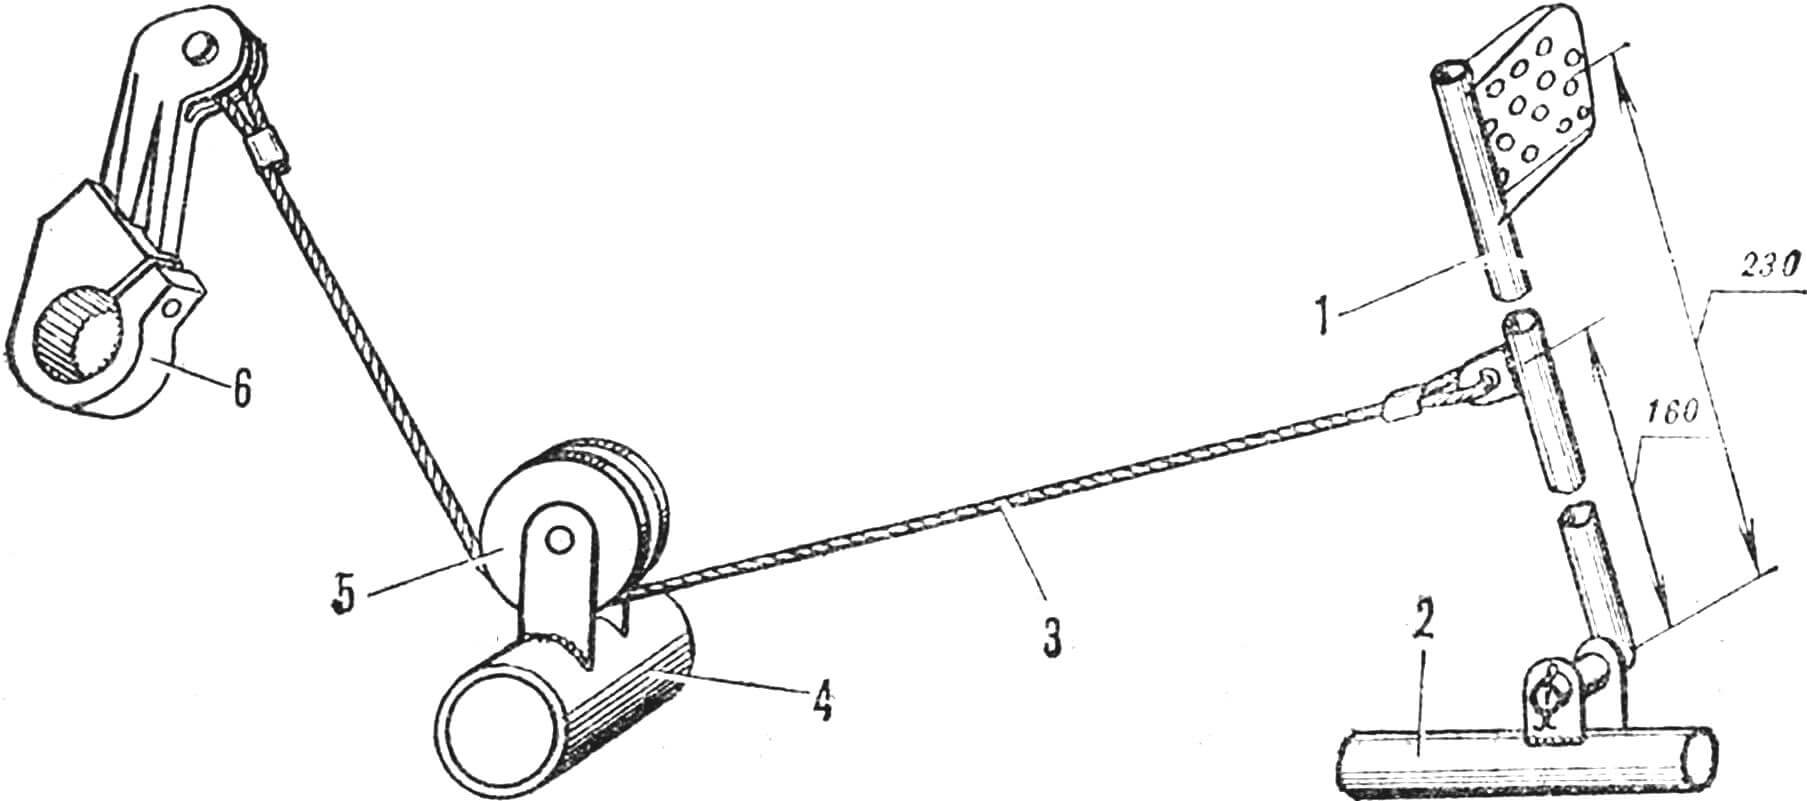 Fig. 7. Kick-starter pedal drive